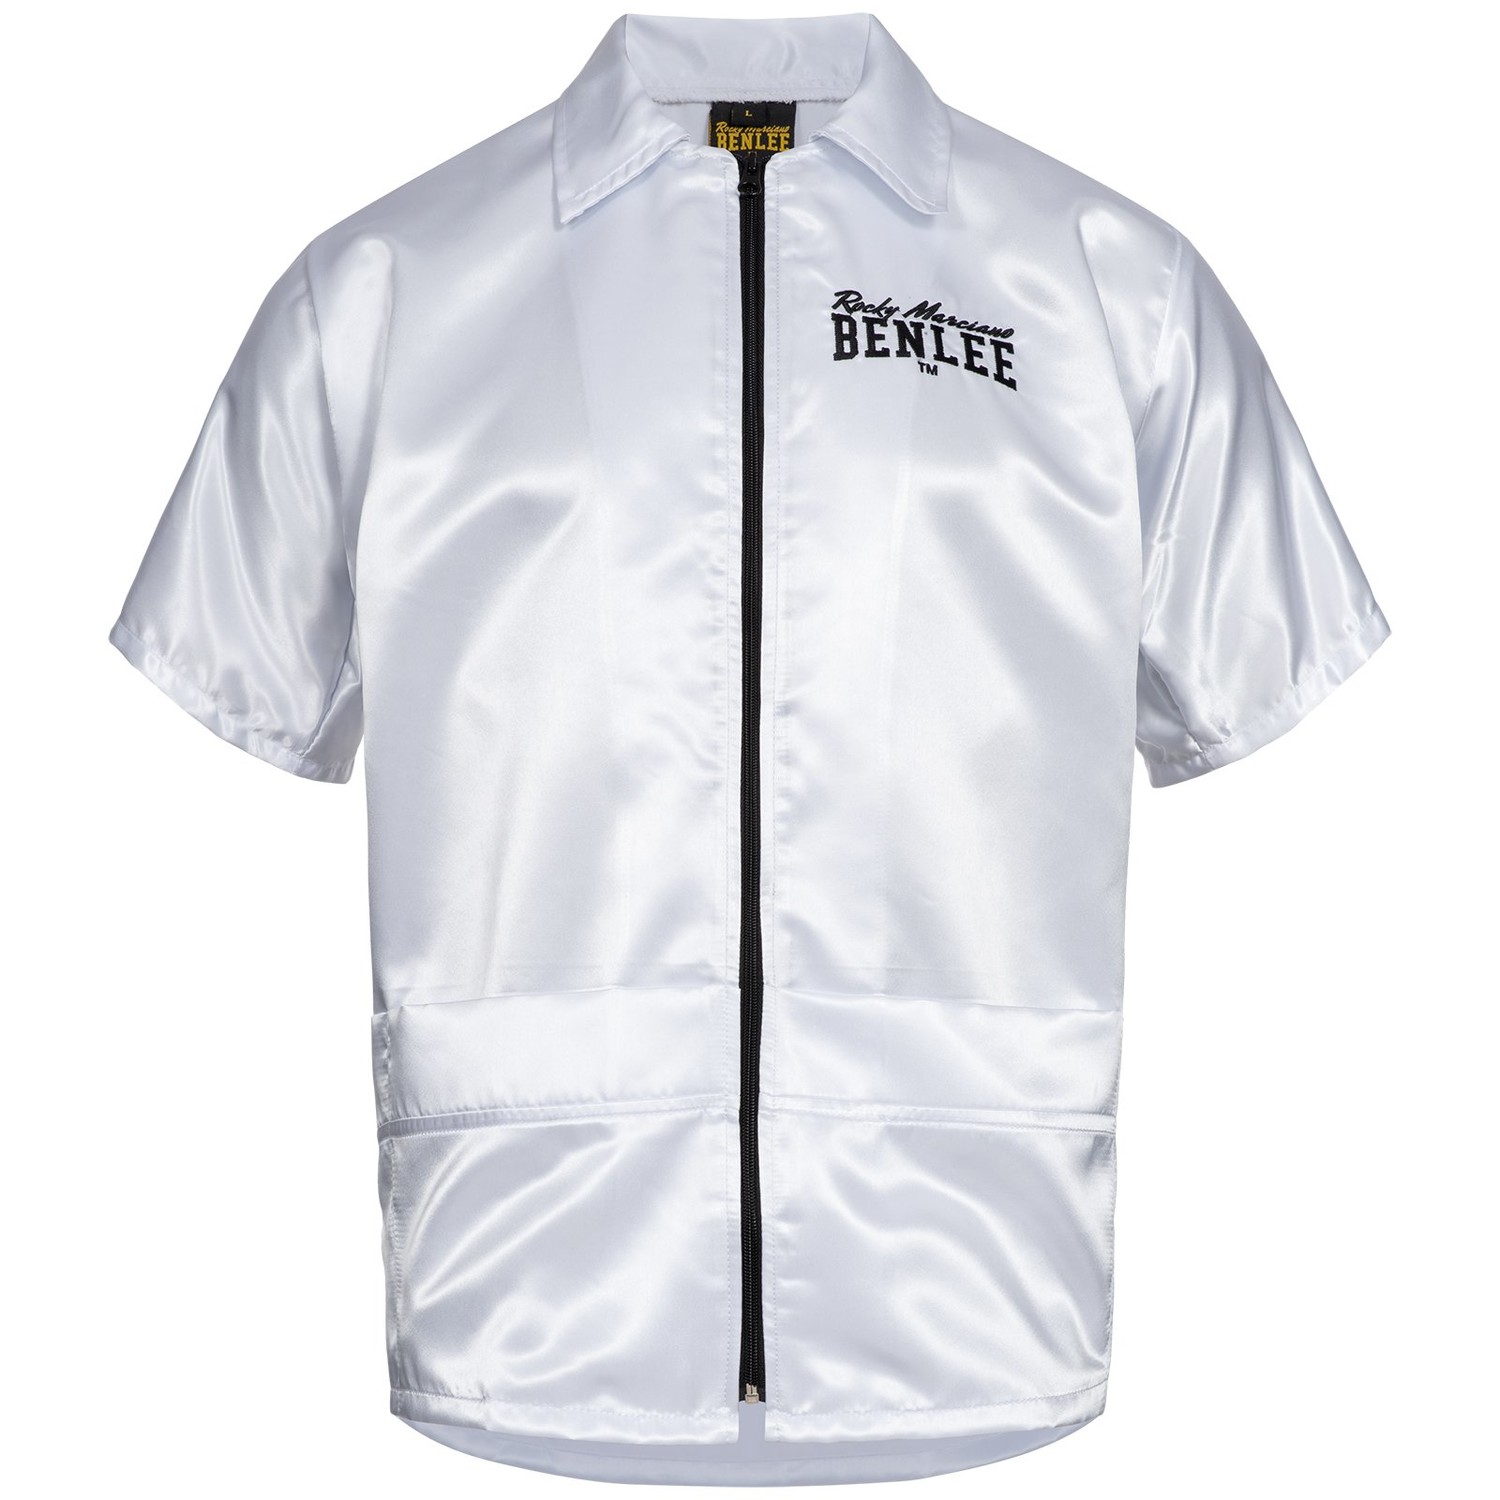 Benlee Coach jacket